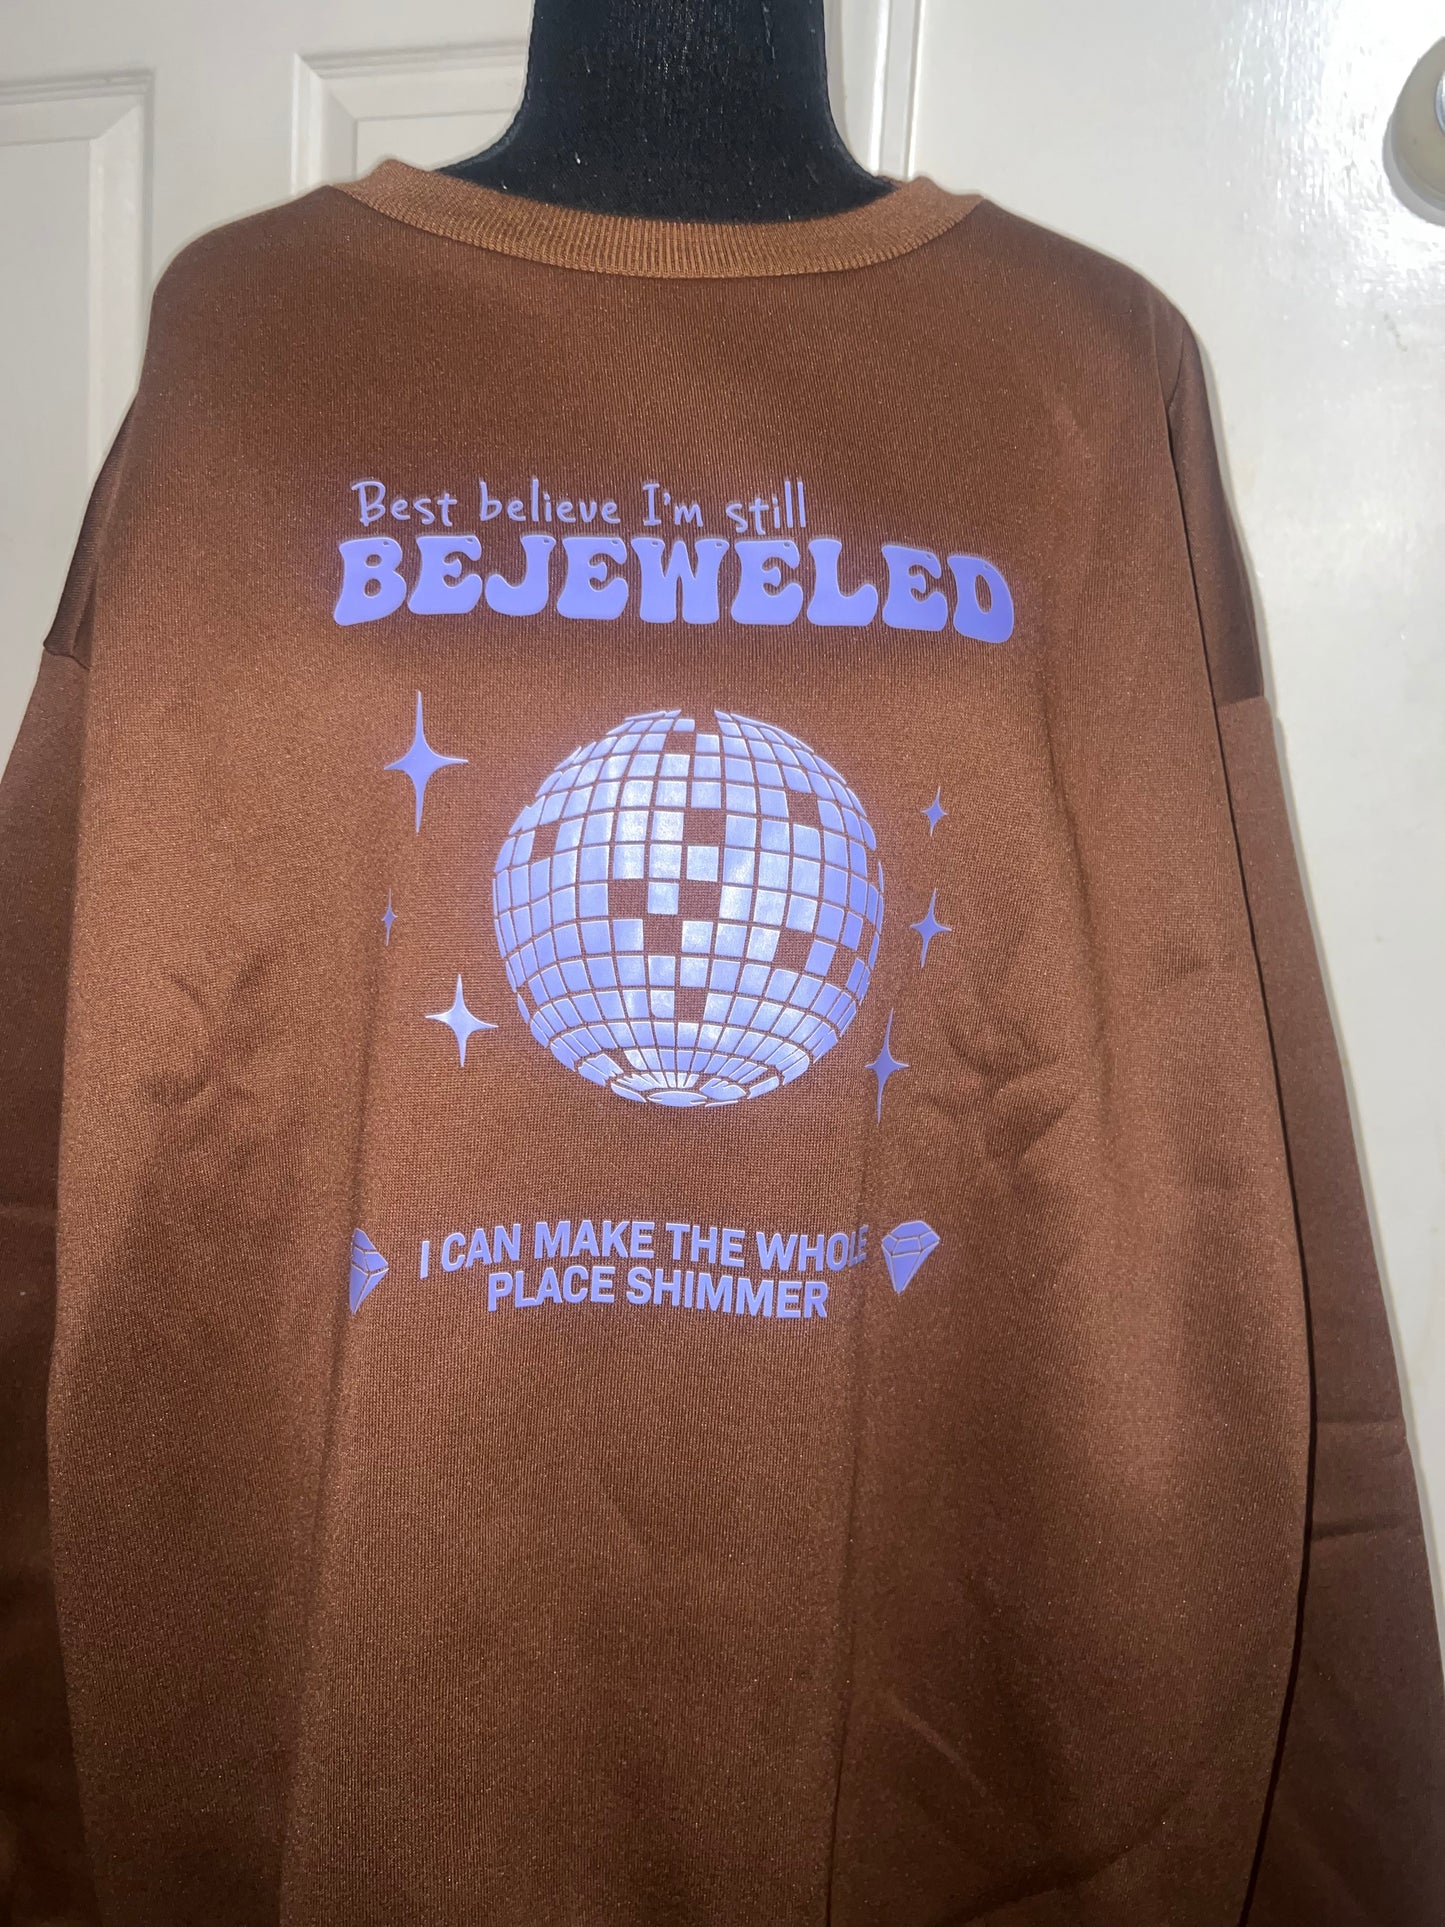 Taylor Swift Bejeweled Oversized Sweatshirt